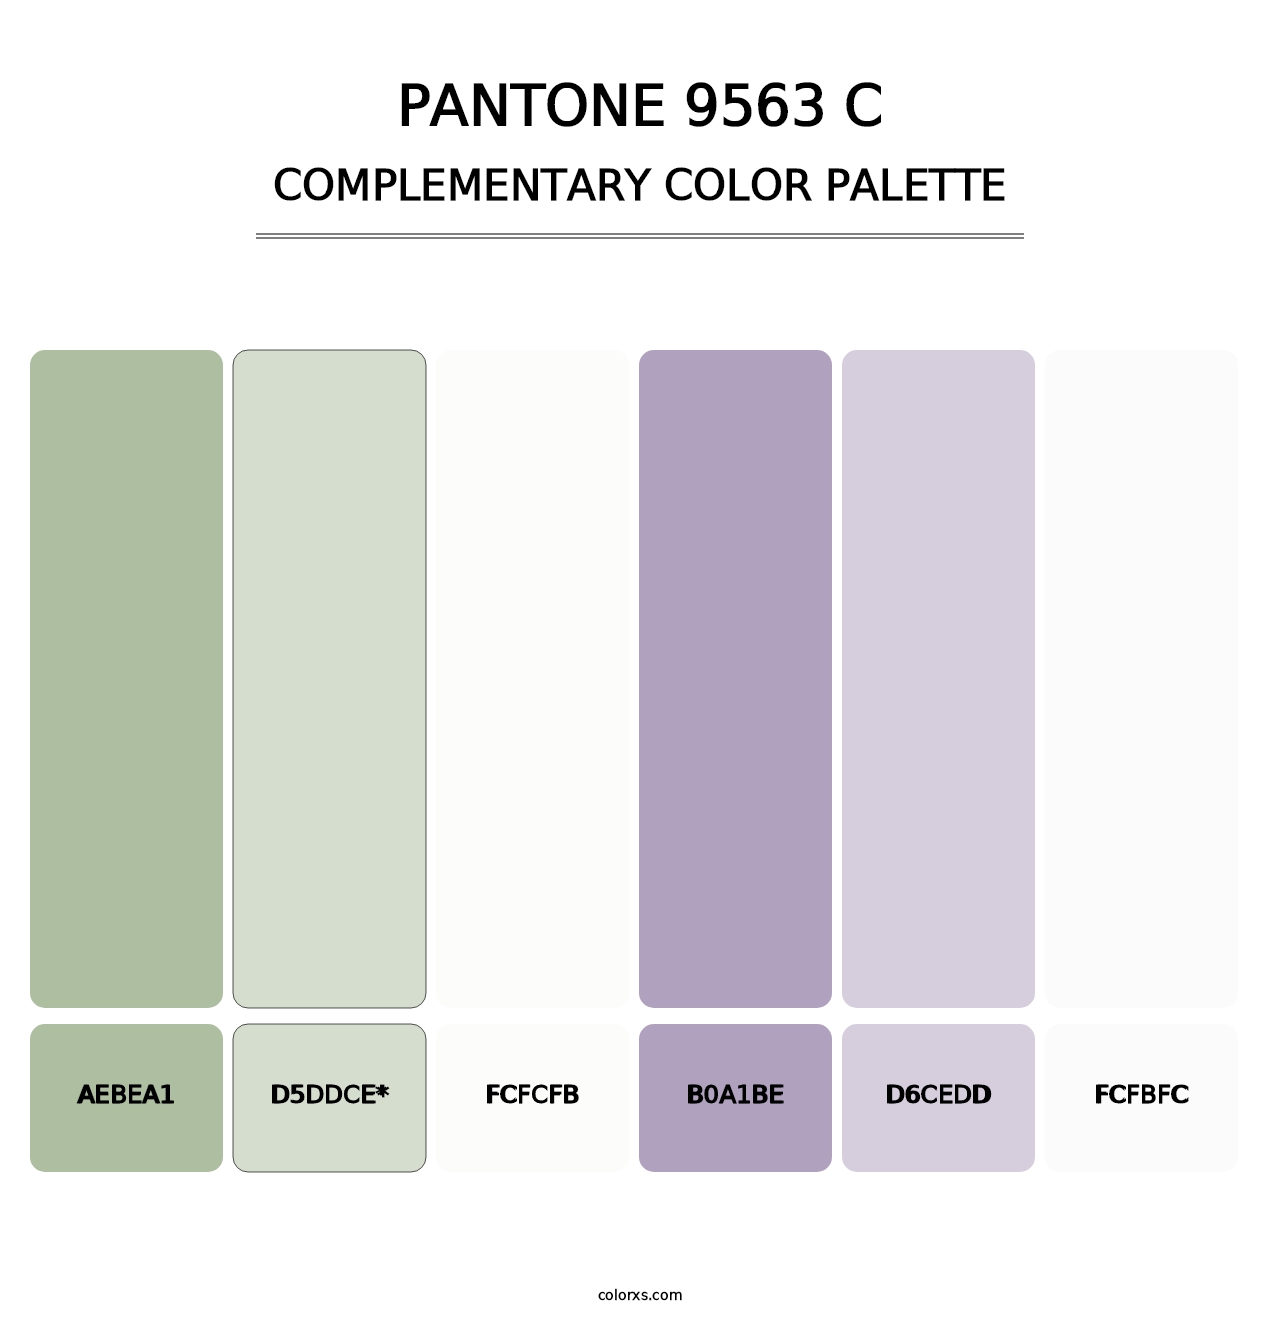 PANTONE 9563 C - Complementary Color Palette